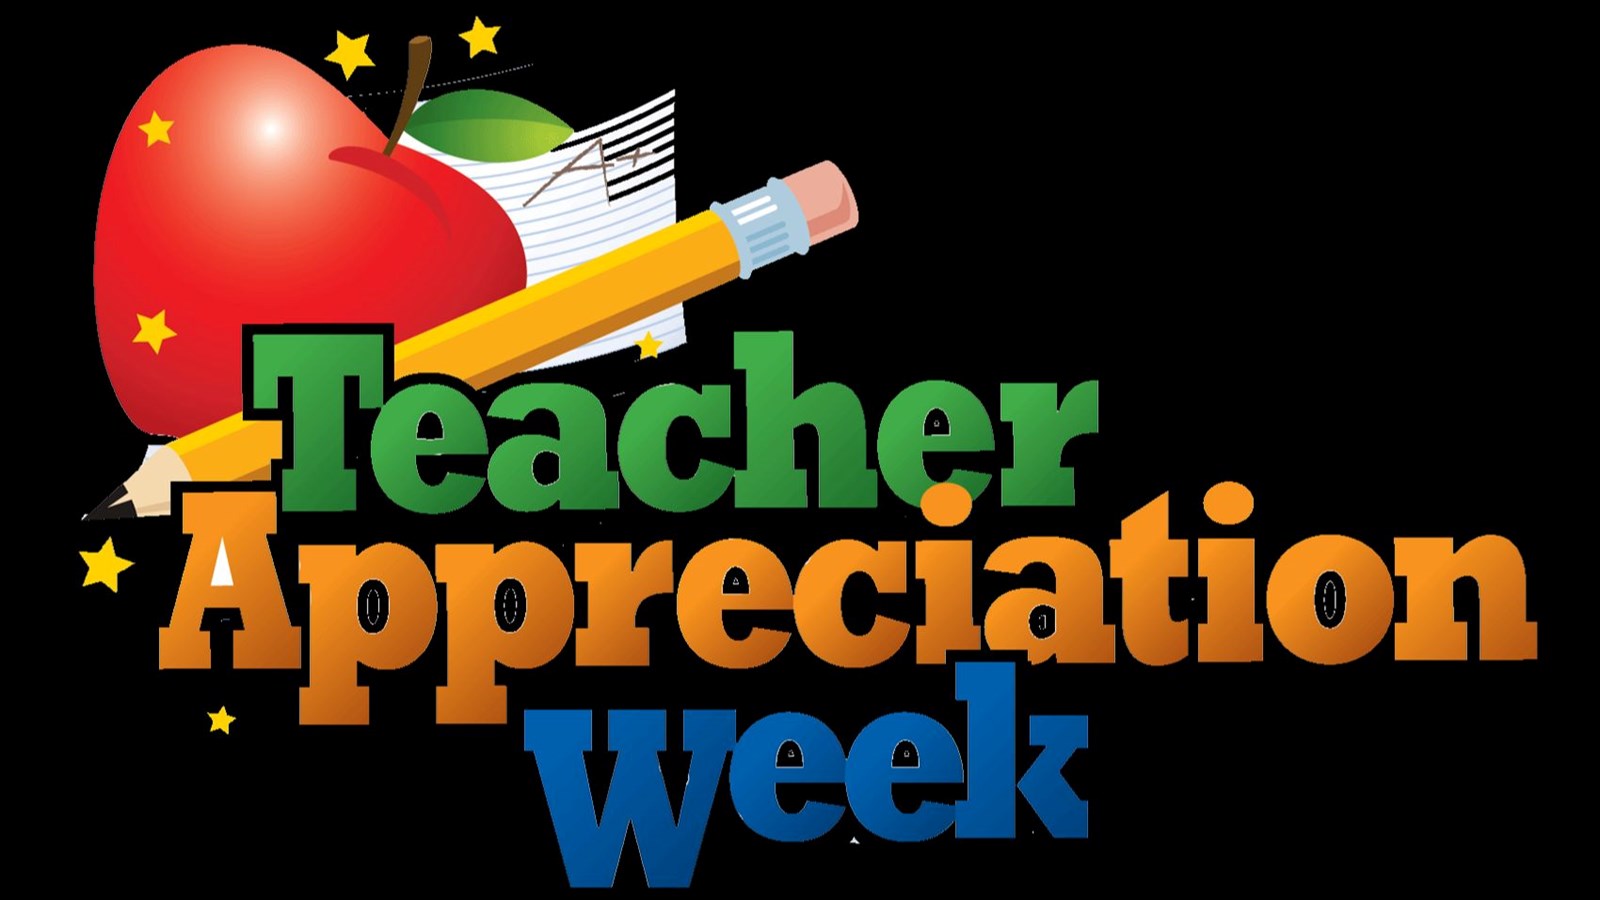 What Color Is Teacher Appreciation Week